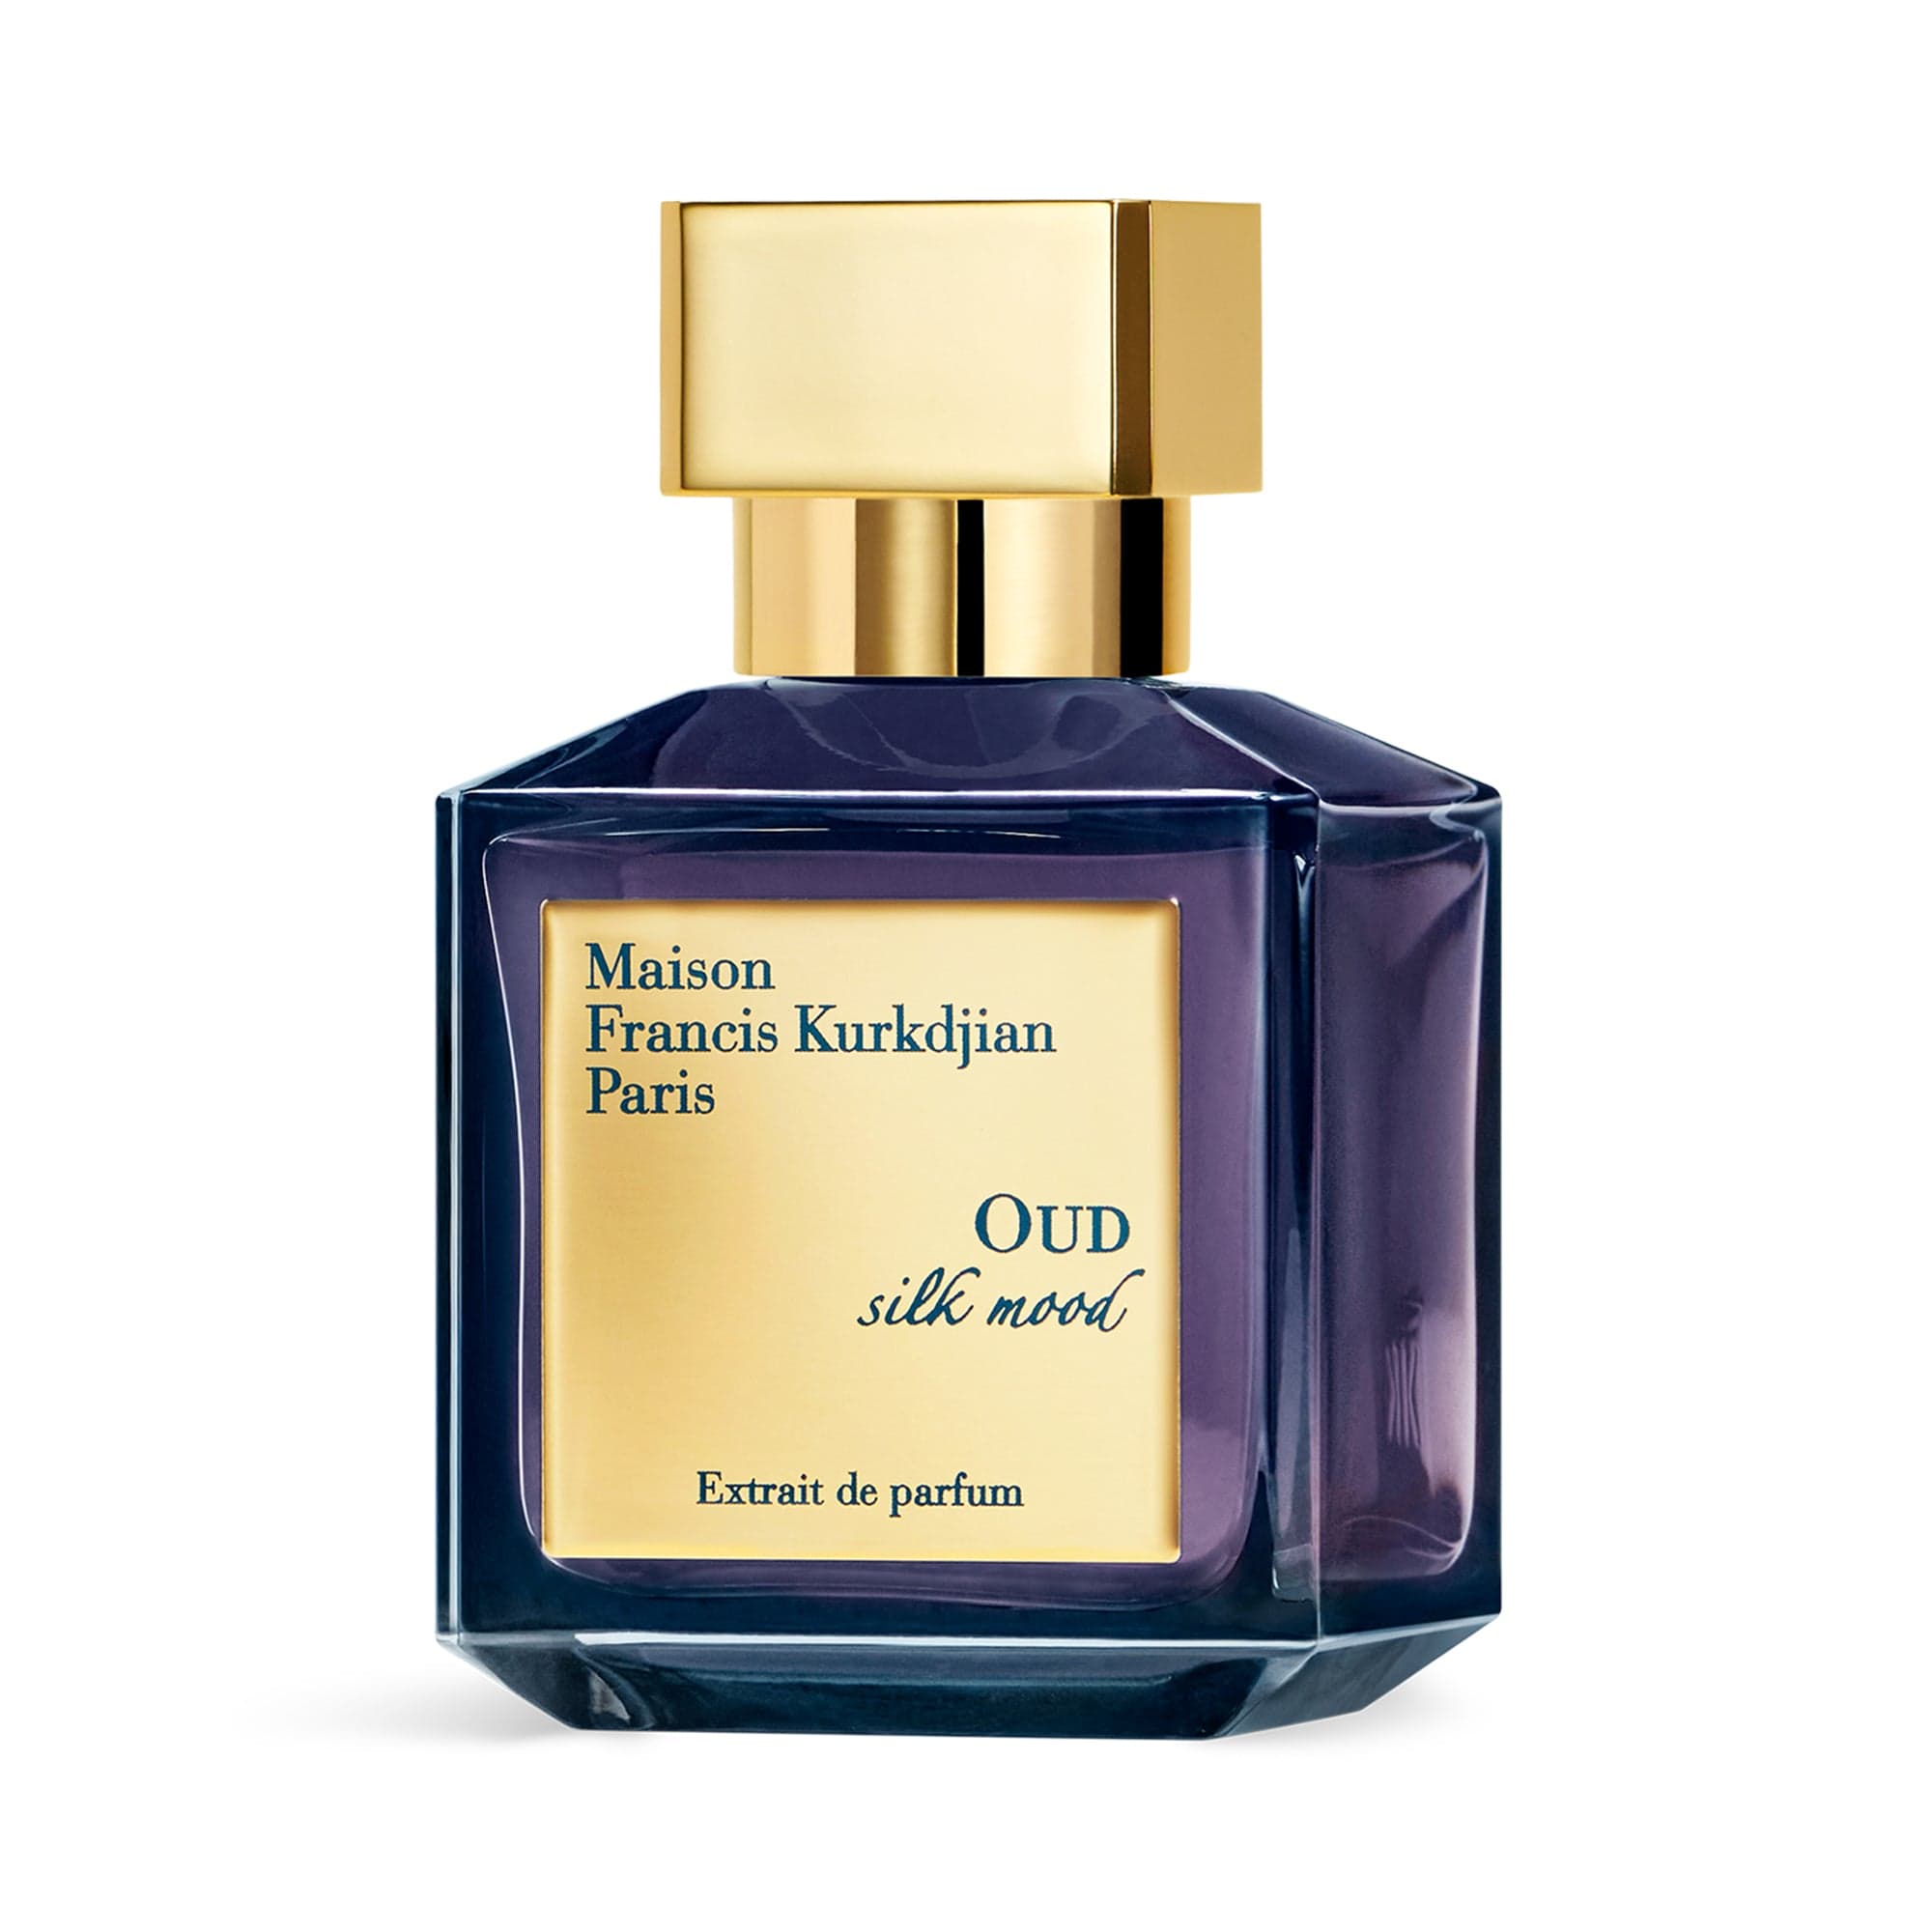 OUD Silk Mood Maison Francis Kurkdjian Extracto de Perfume